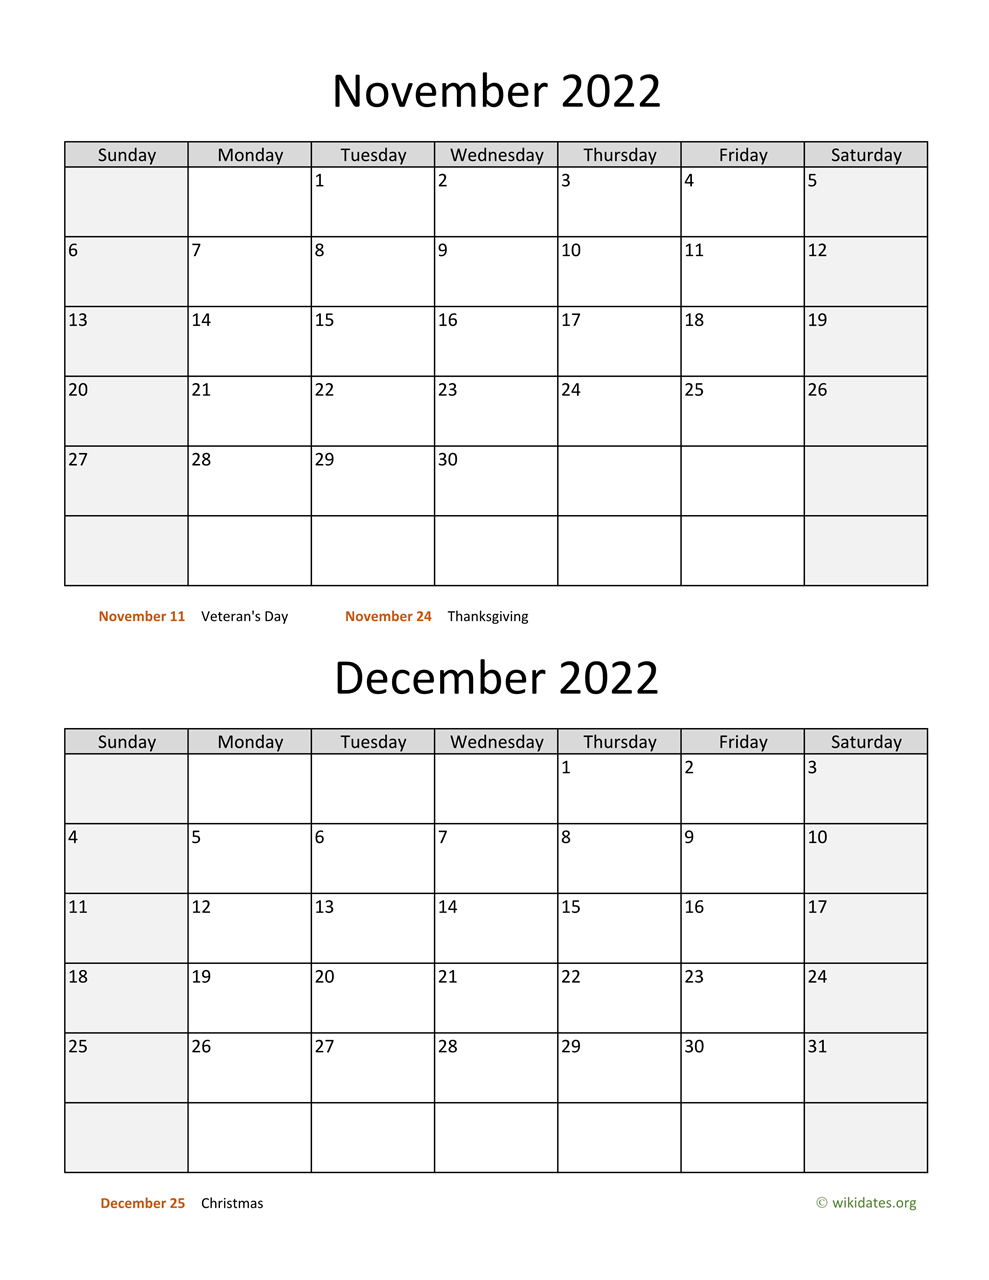 November December Calendar 2022 November And December 2022 Calendar | Wikidates.org